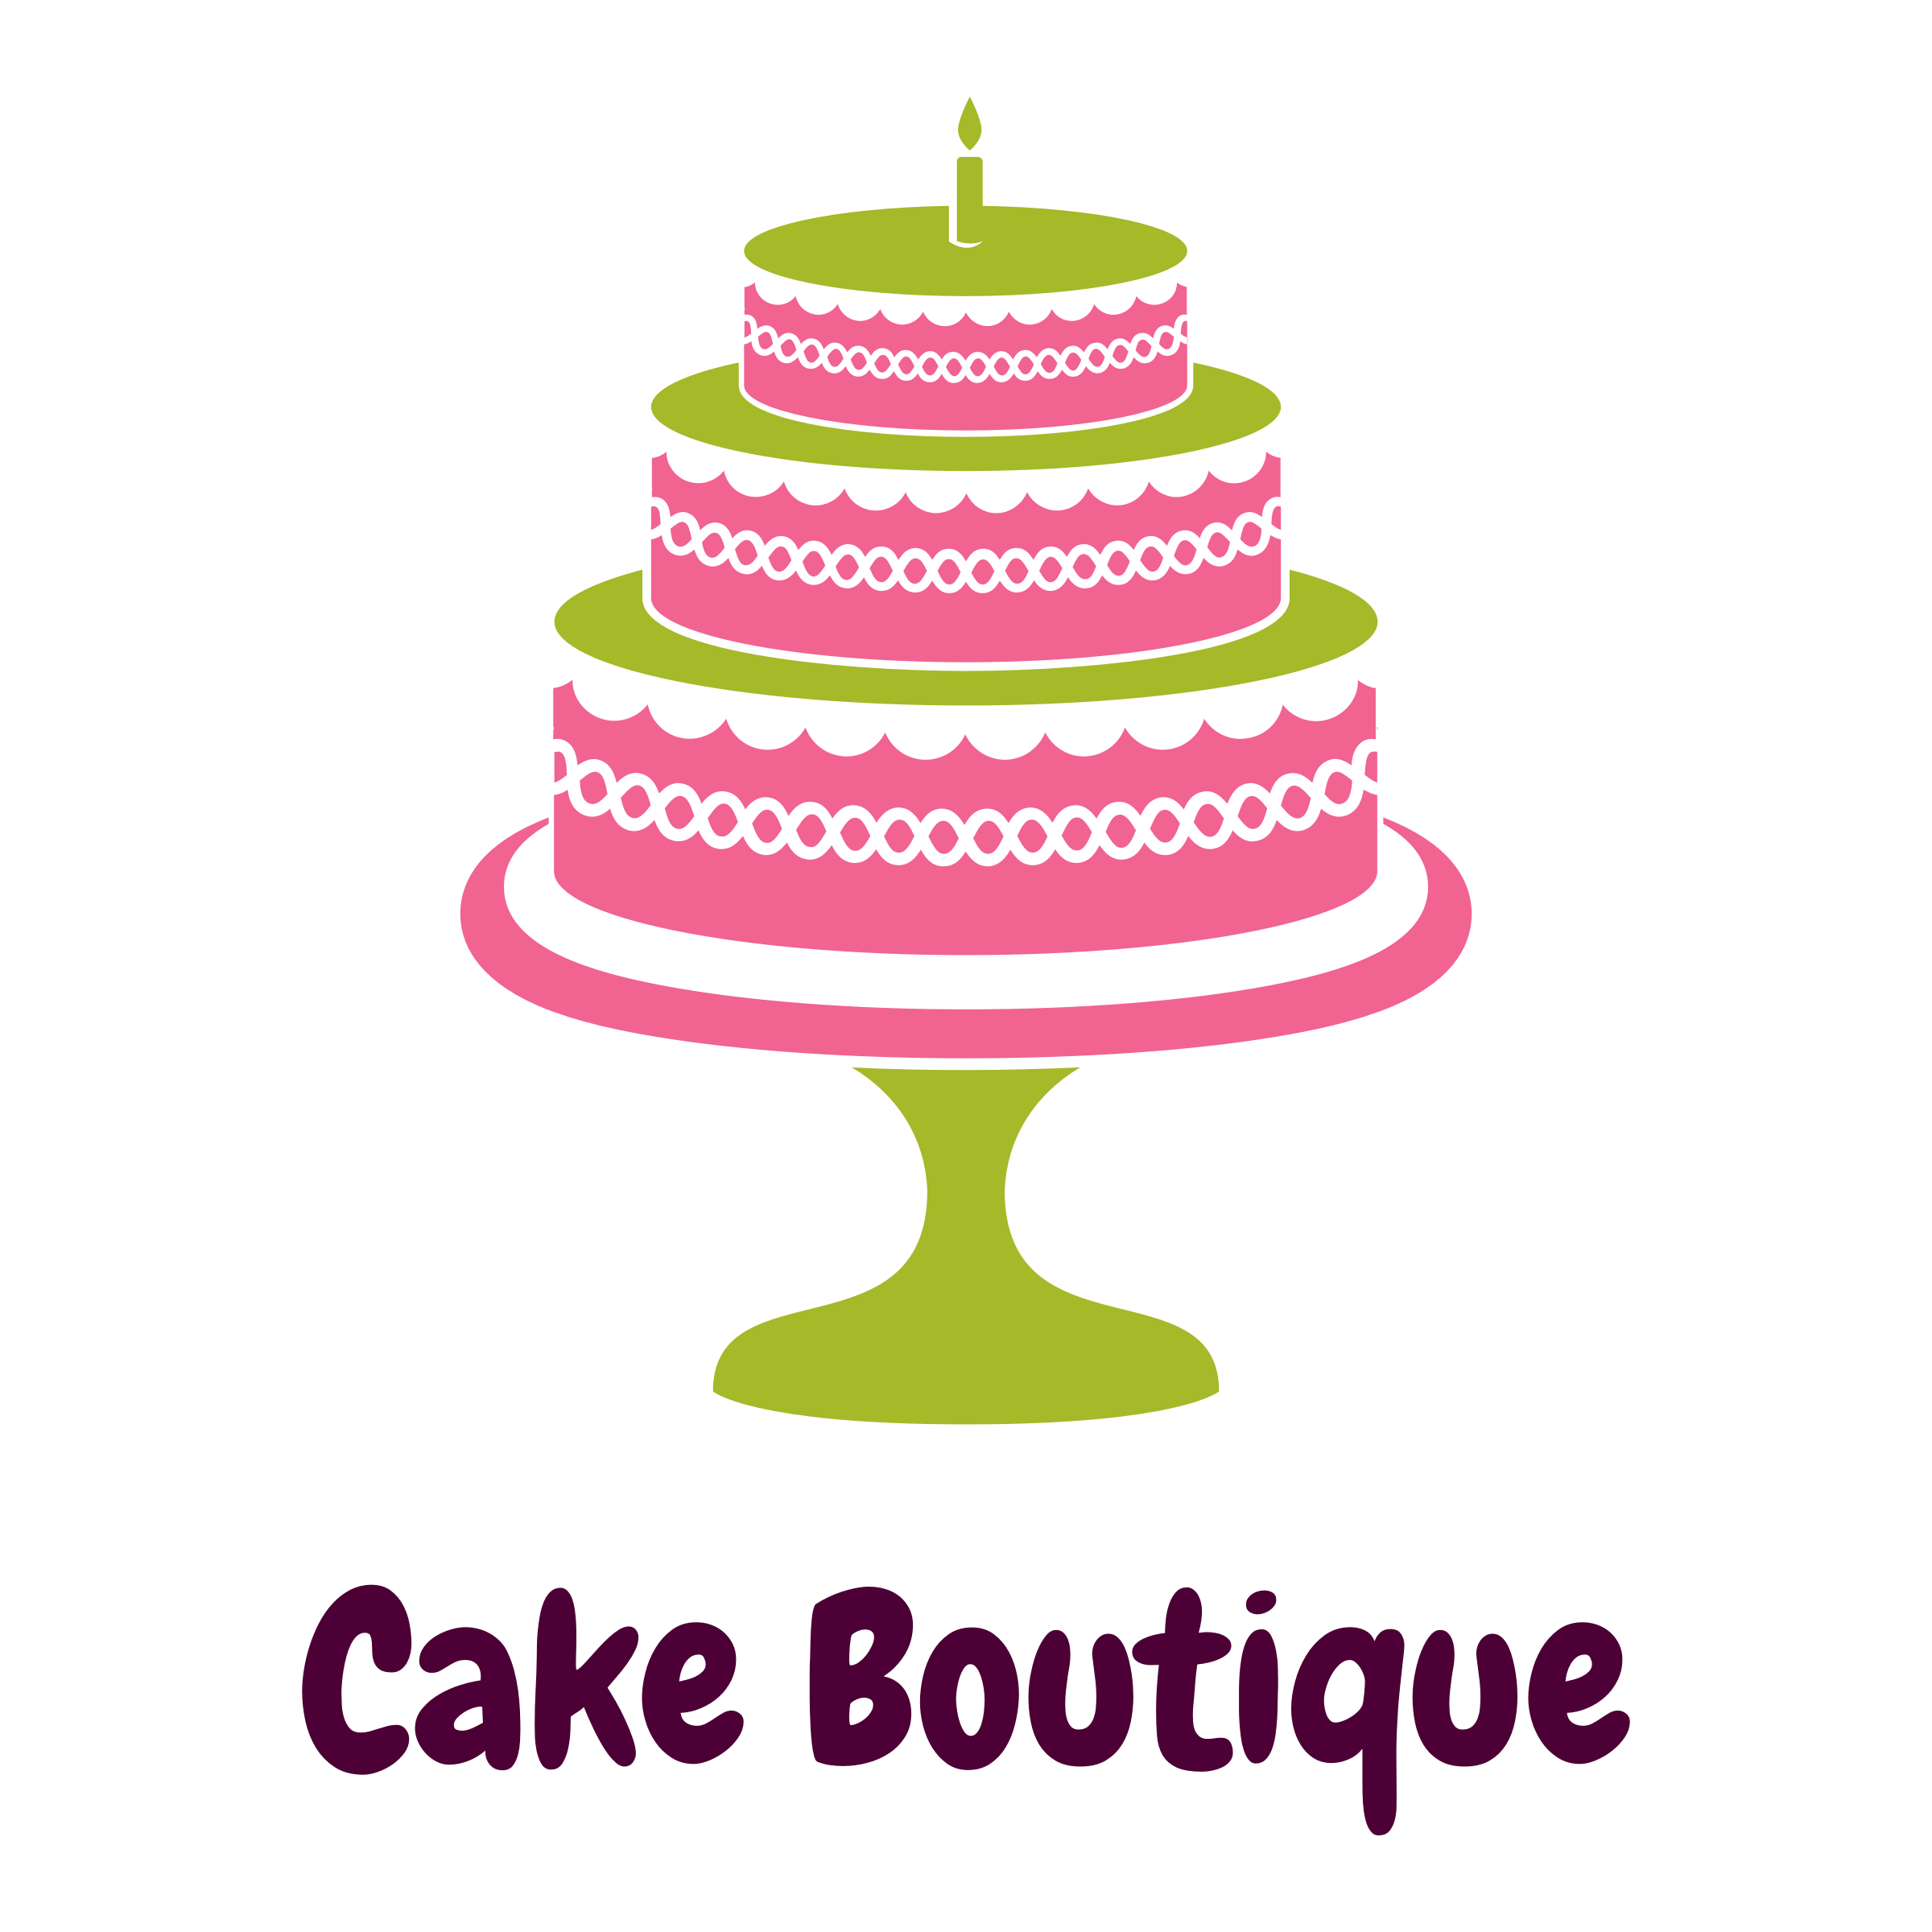 Happy Birthday Cake Logo stock illustration. Illustration of head - 21768843